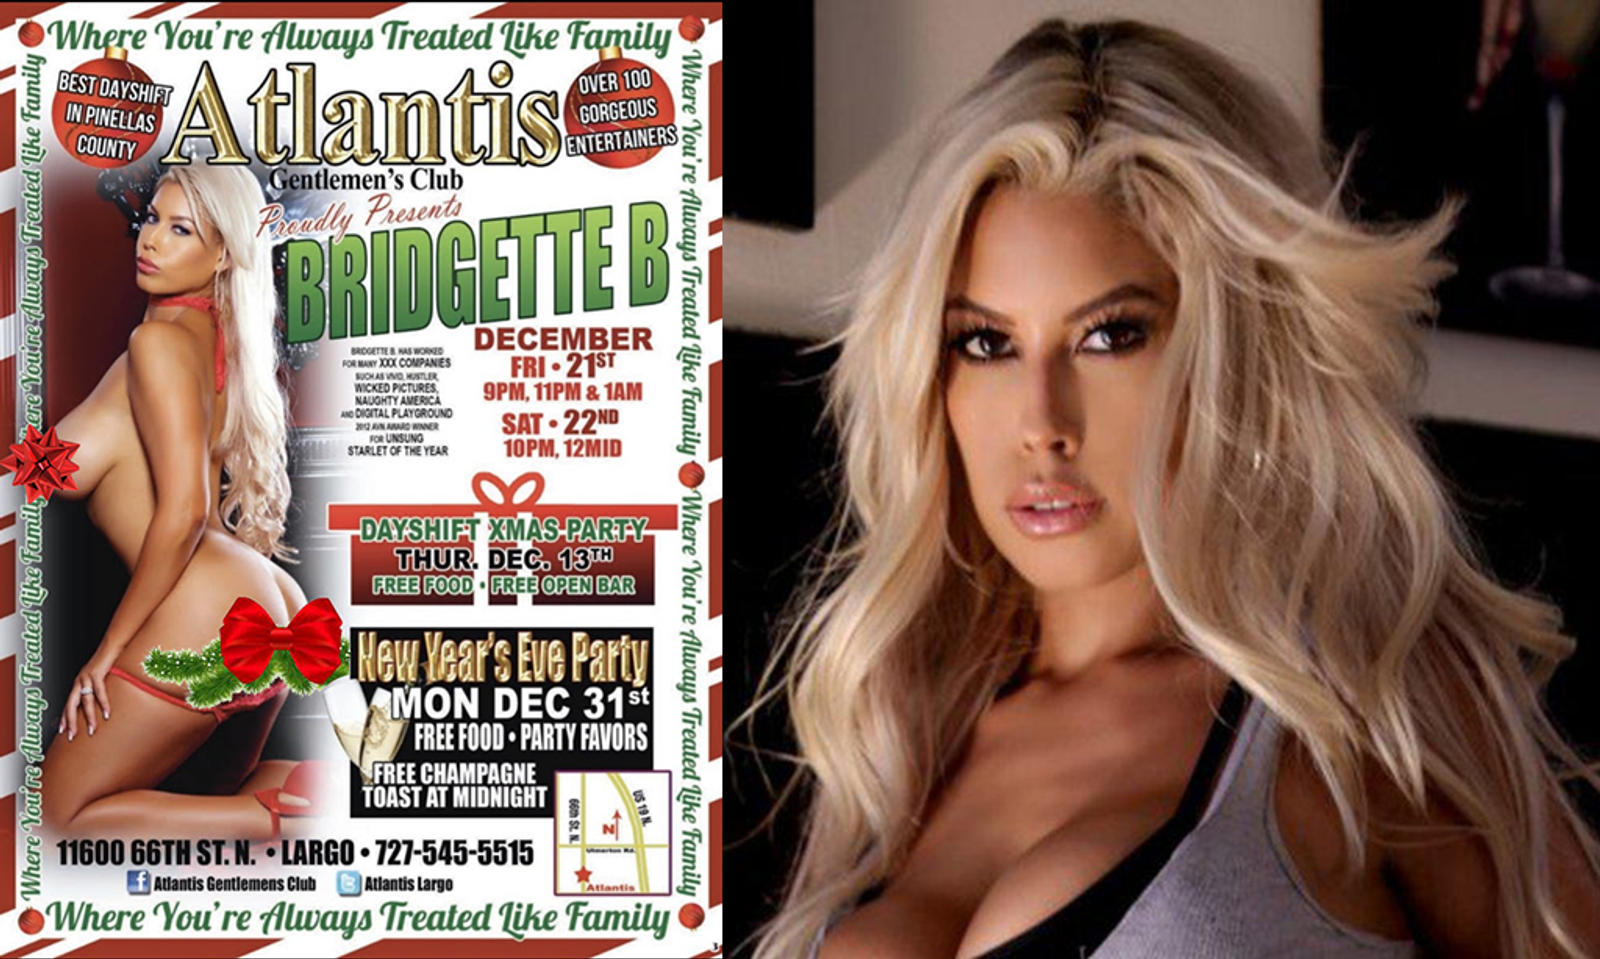 Bridgette B To Feature at Atlantis Gentlemen’s Club in Largo, FL